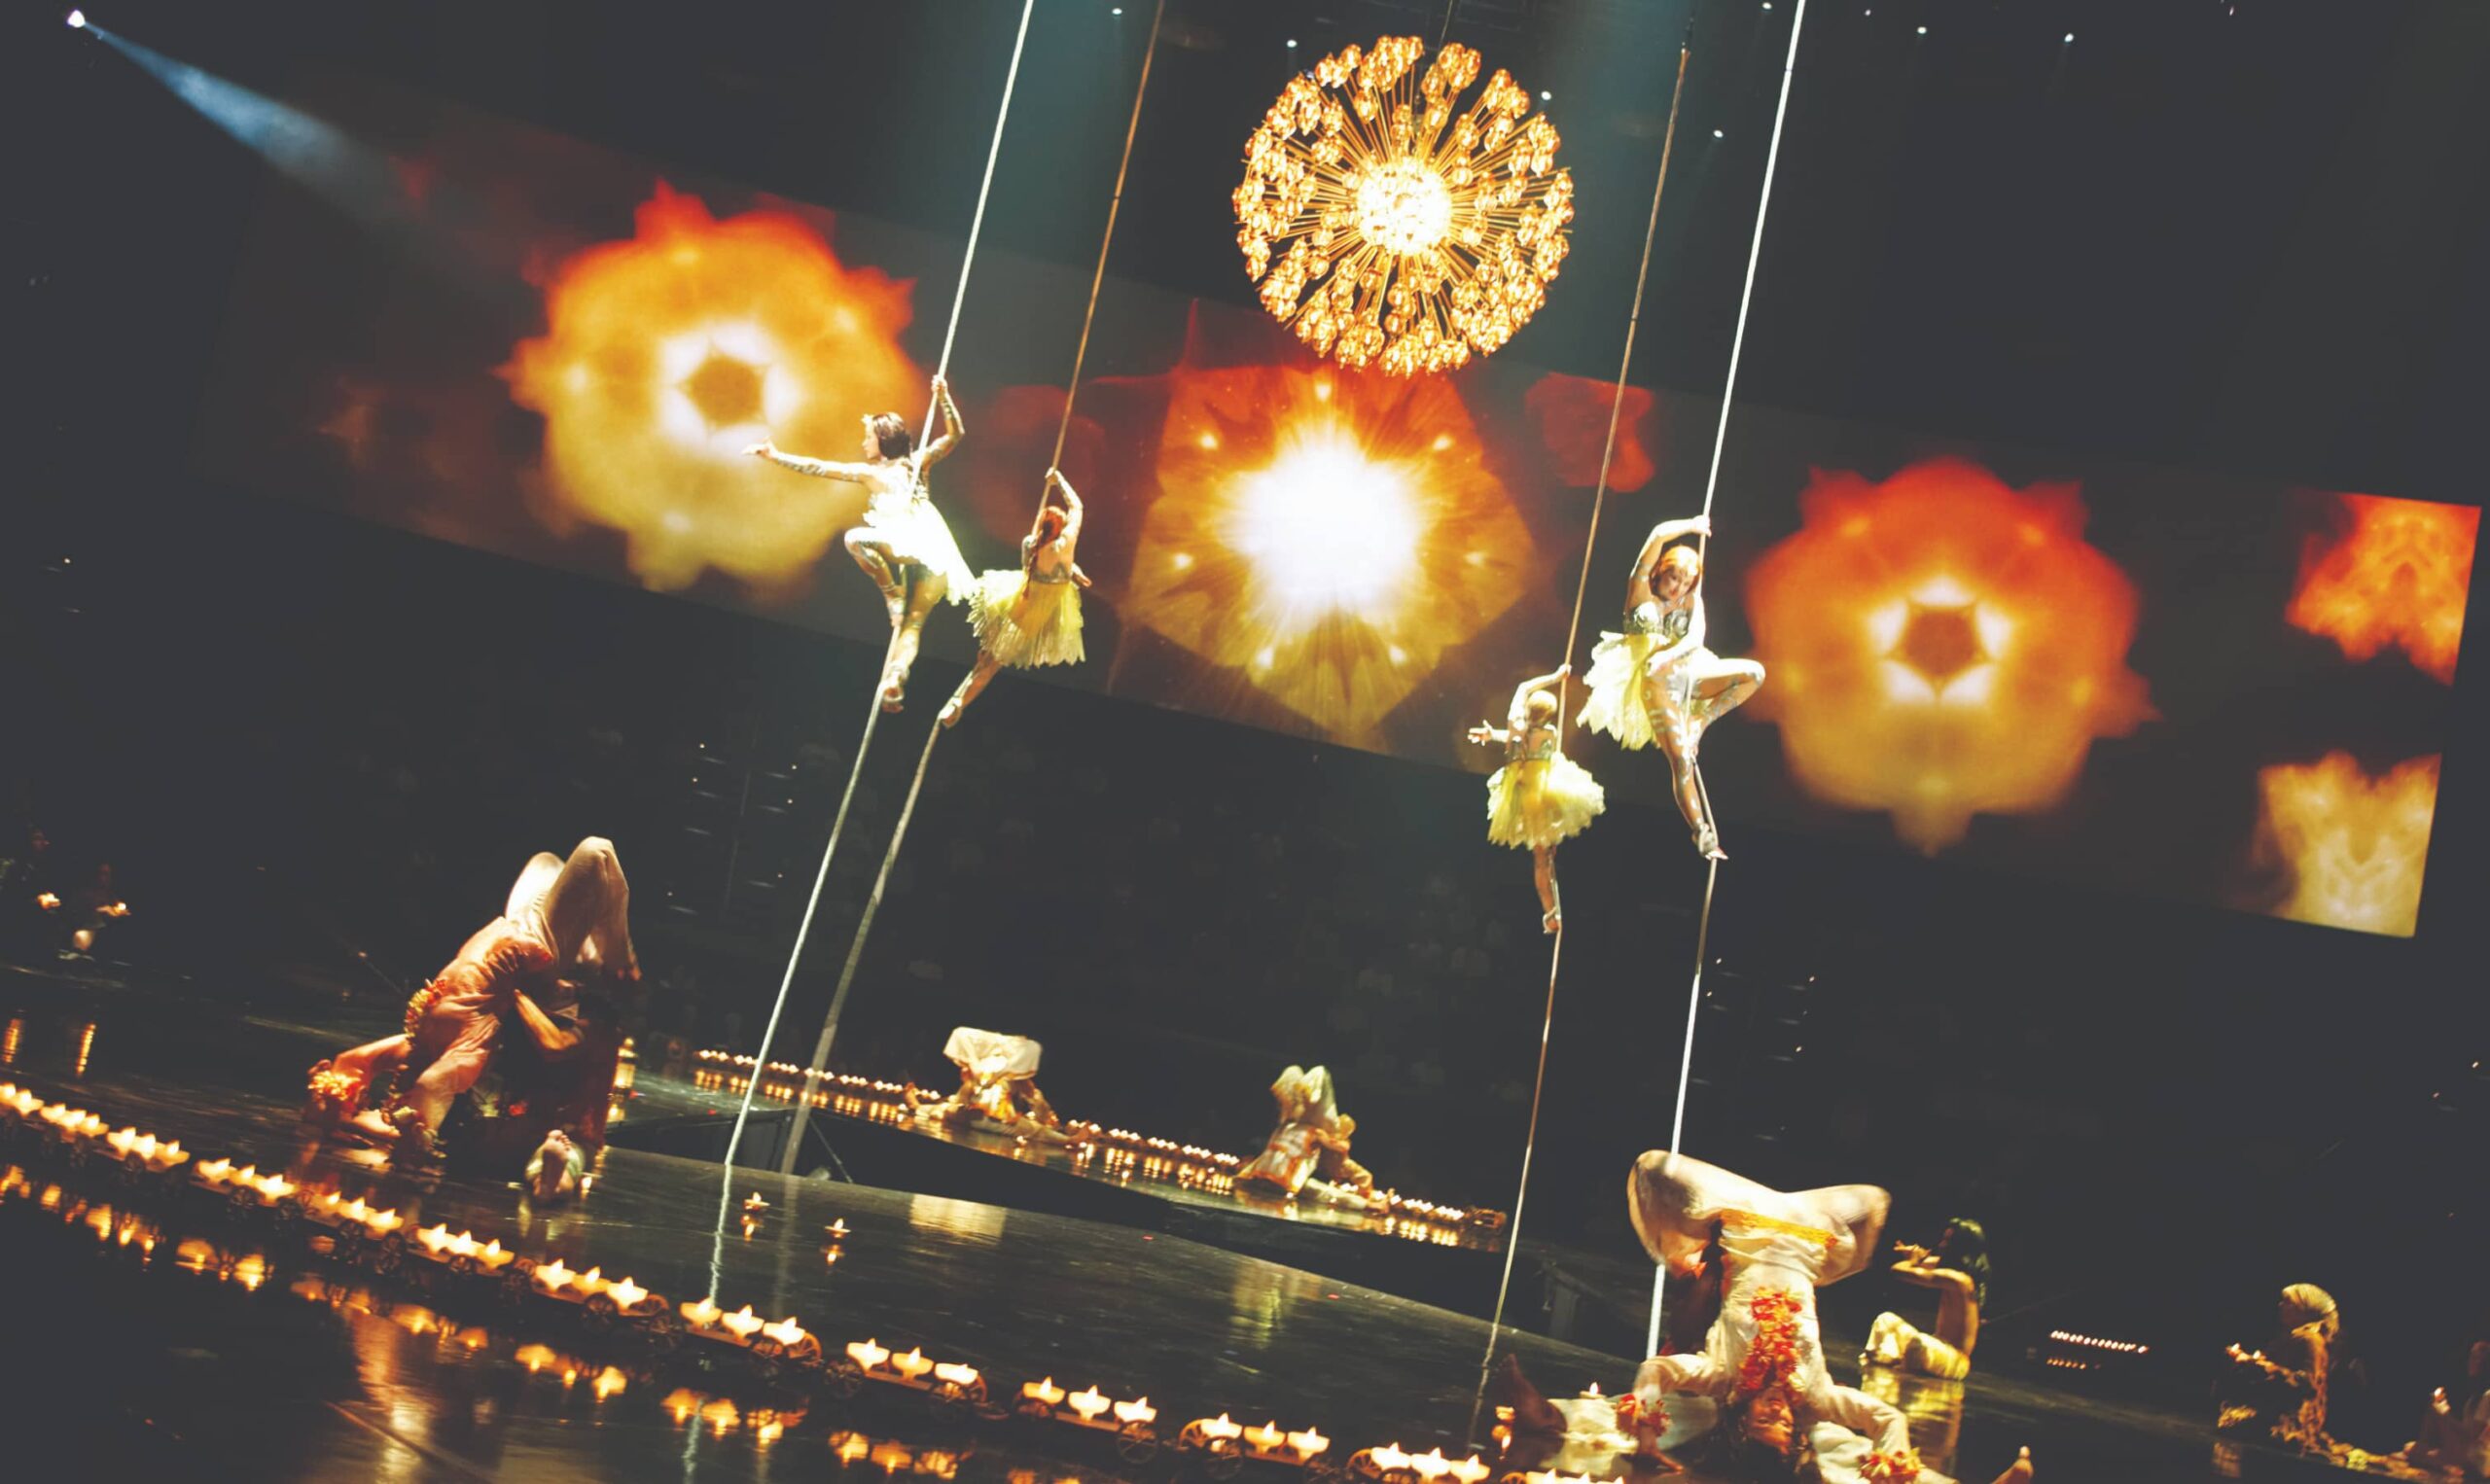 Beatles LOVE Theatre – Cirque du Soleil